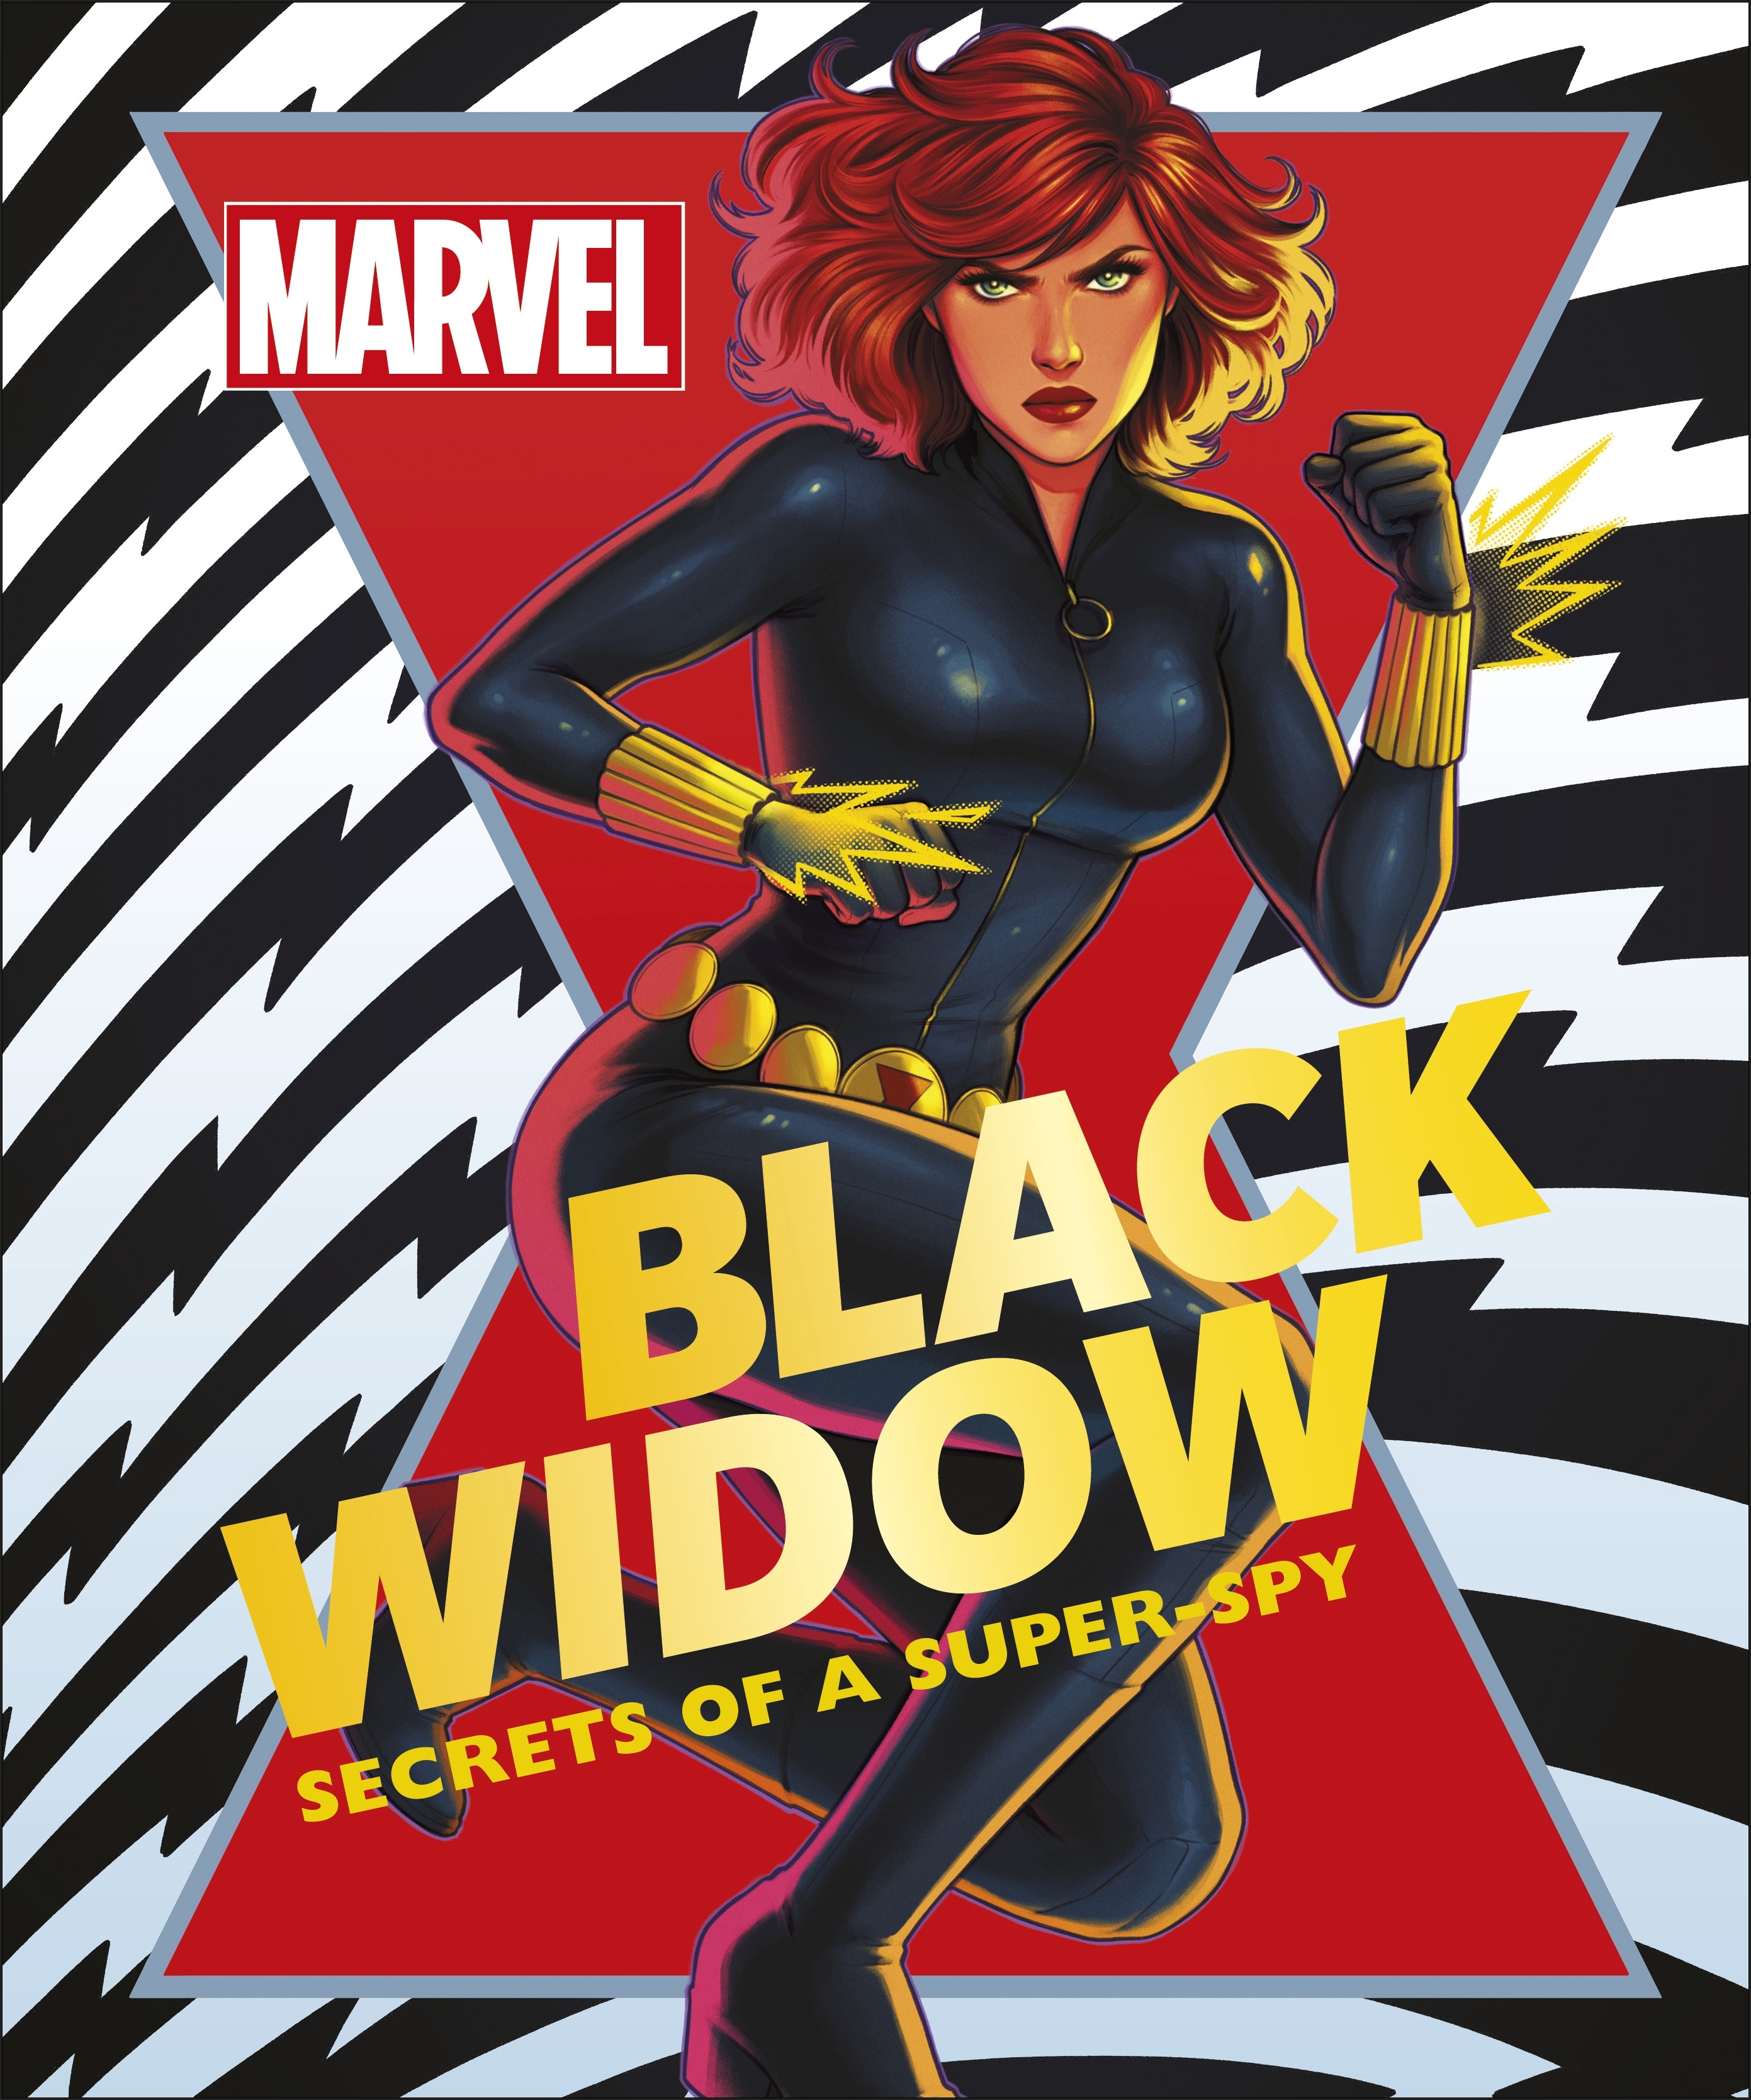 Marvel Black Widow Penguin Books Australia 